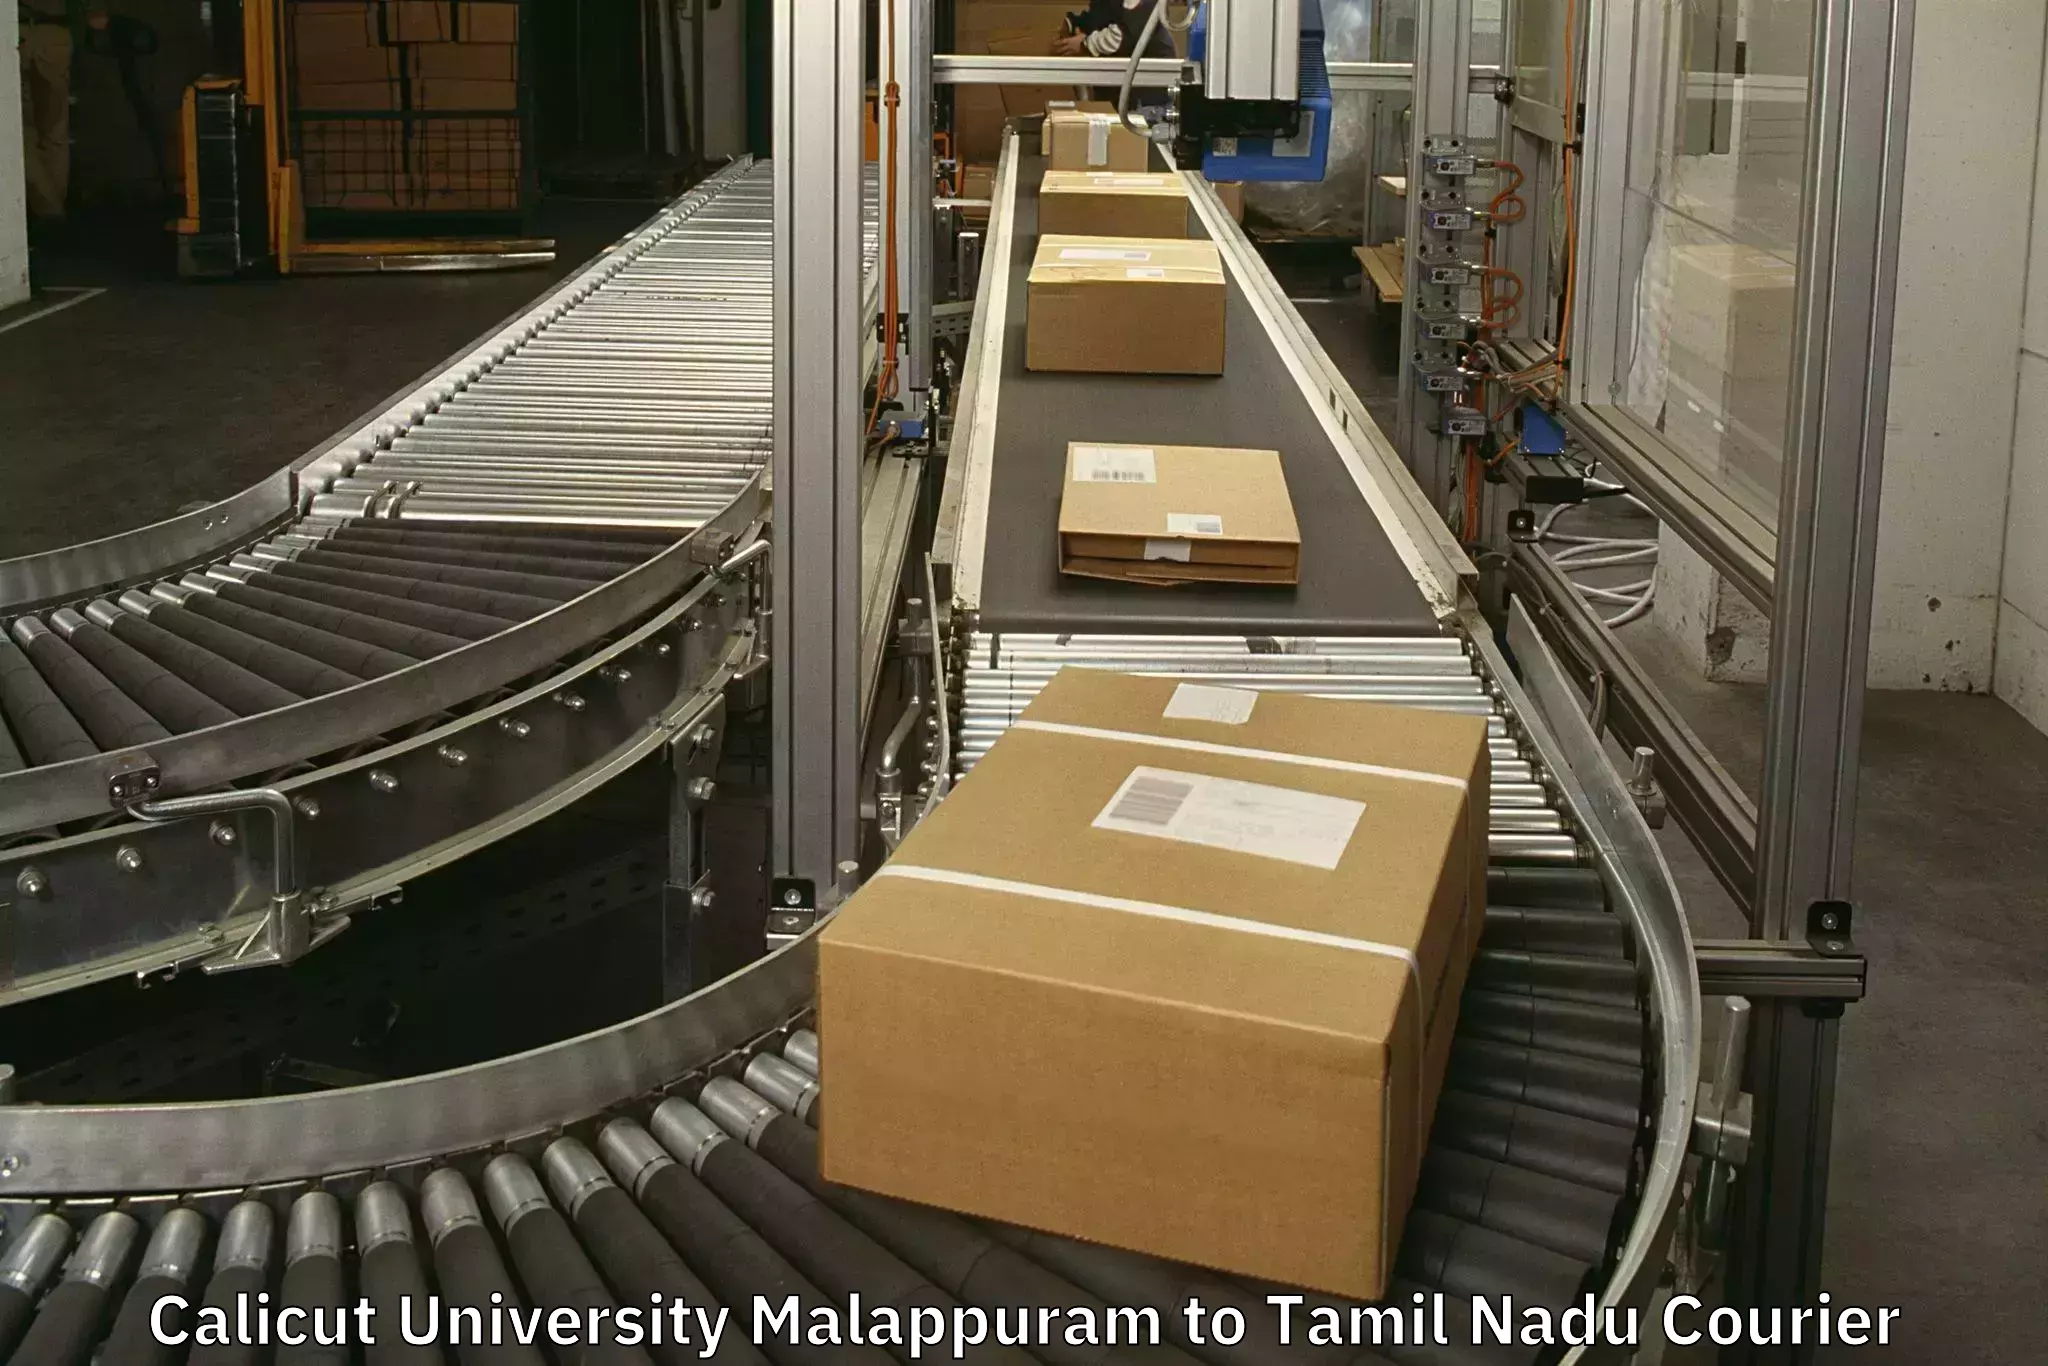 Same day luggage service Calicut University Malappuram to Chennai Port